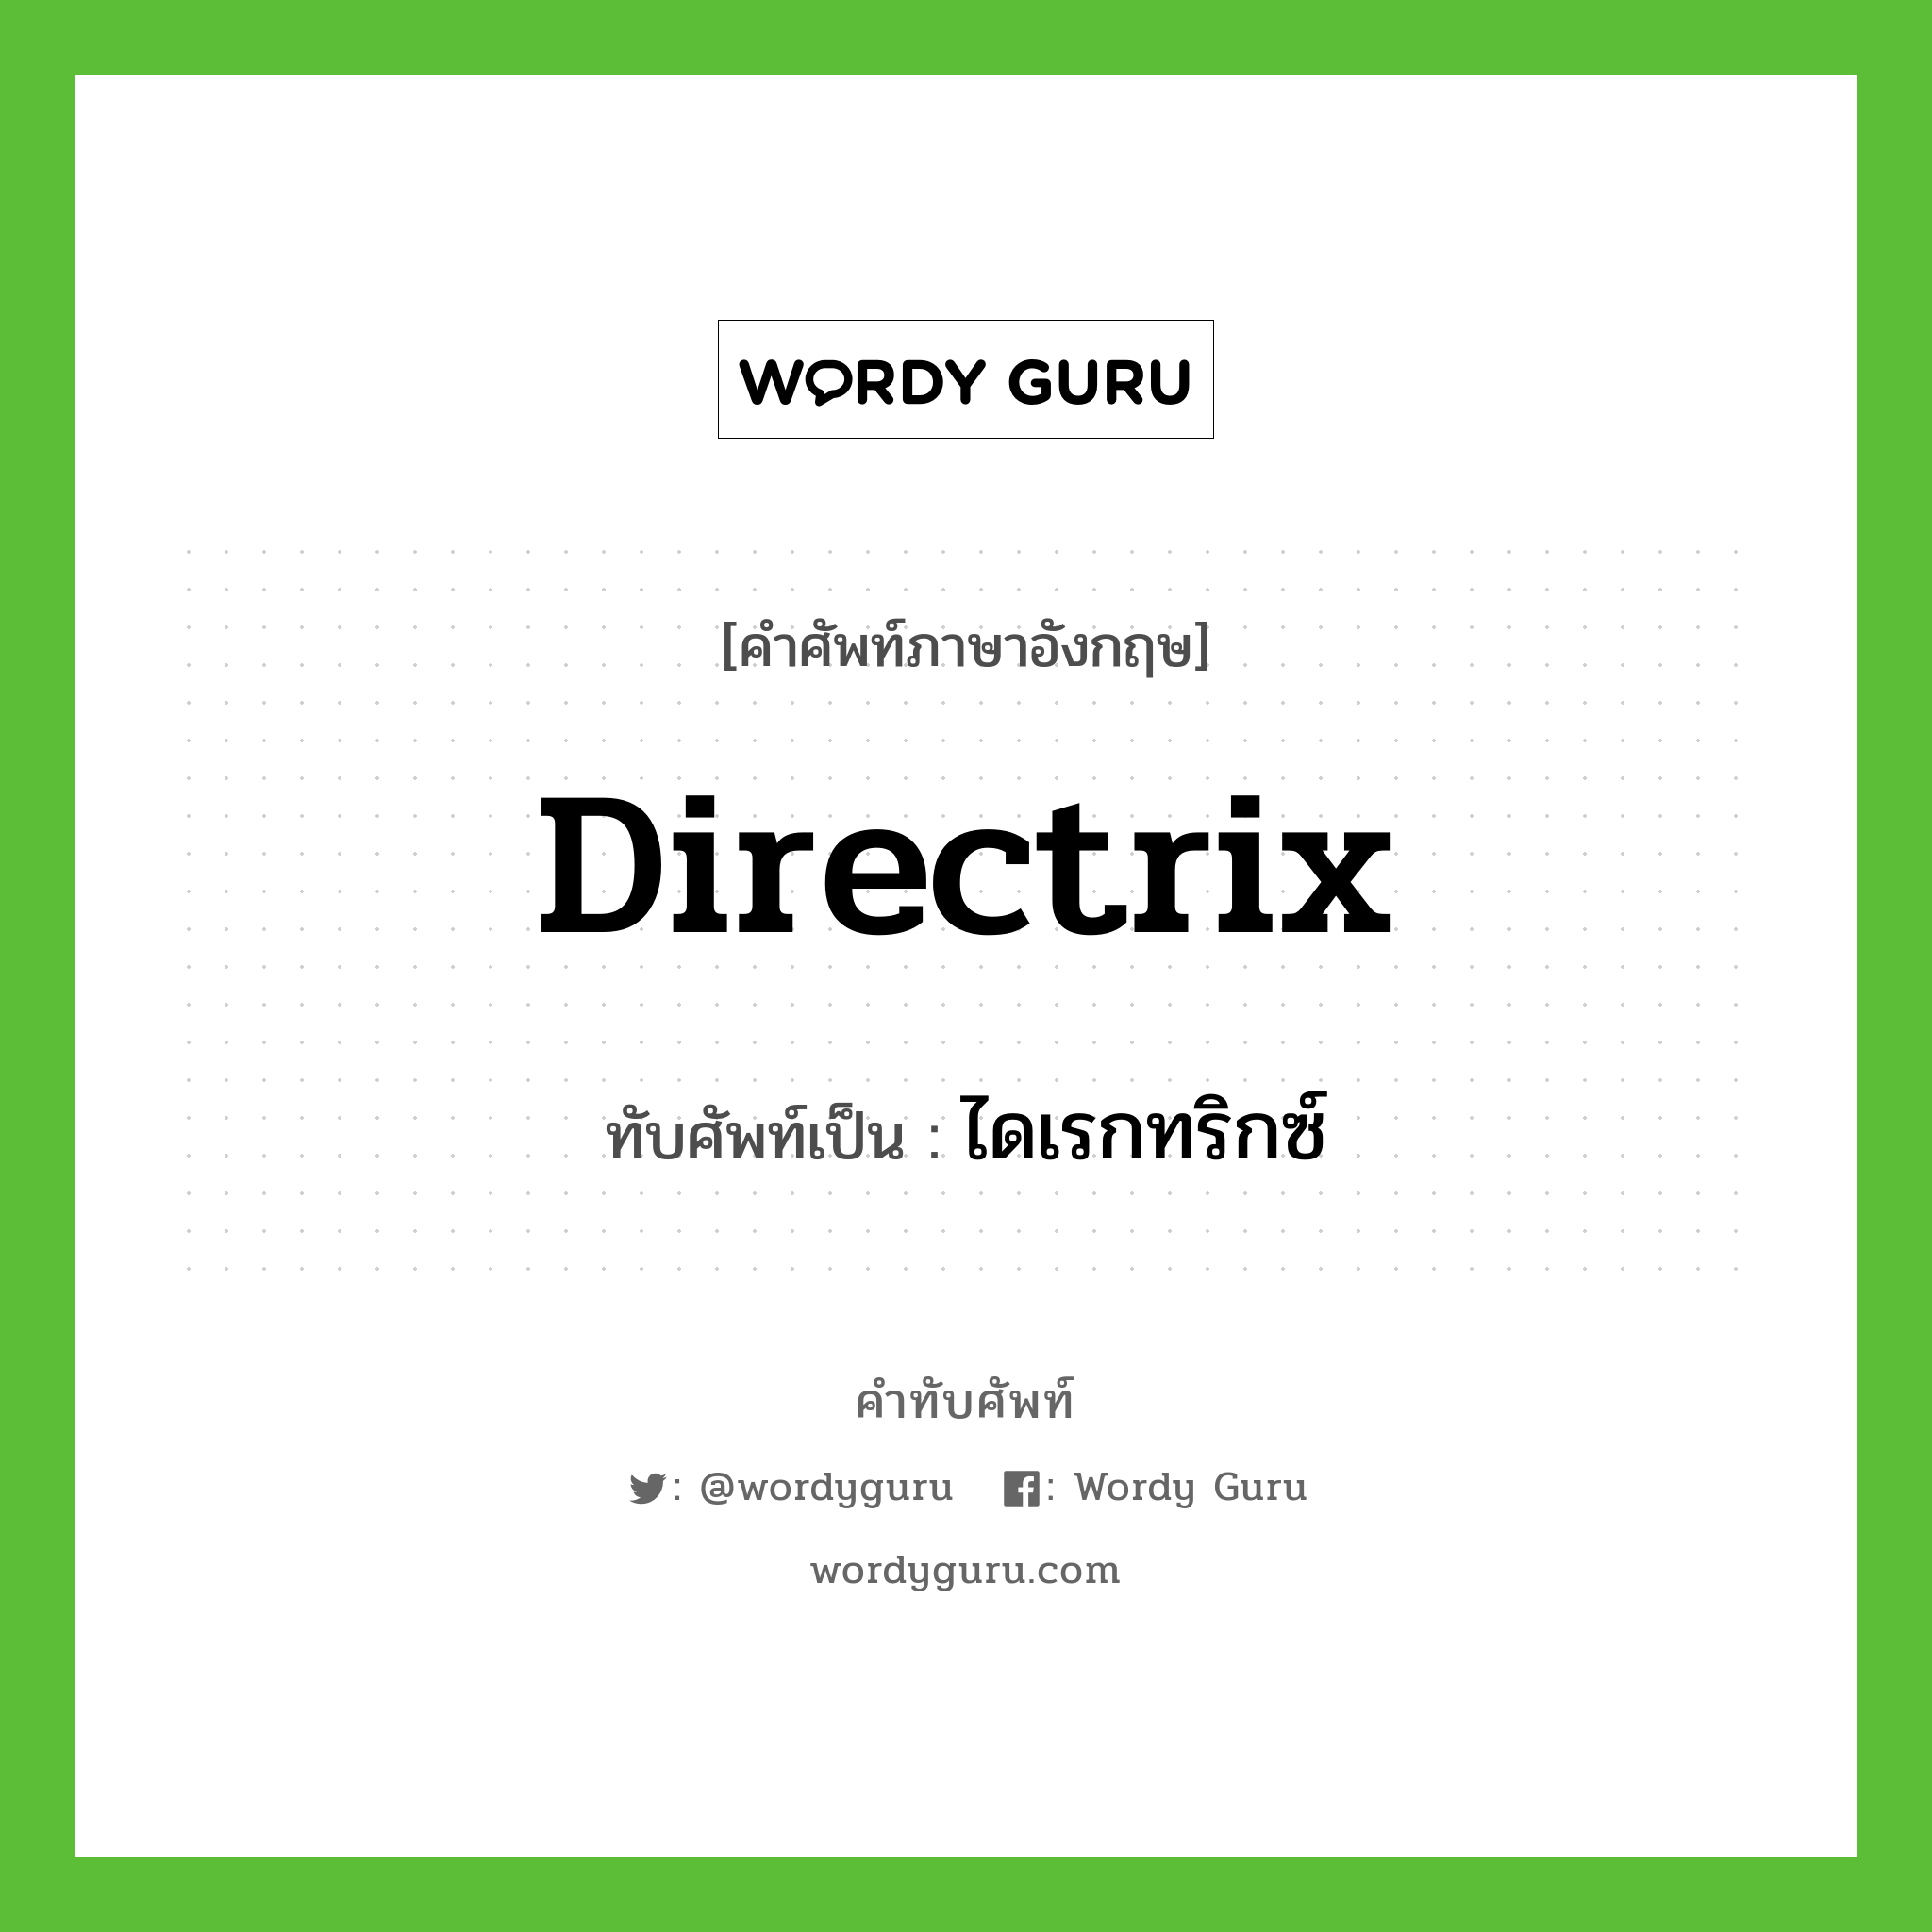 directrix เขียนเป็นคำไทยว่าอะไร?, คำศัพท์ภาษาอังกฤษ directrix ทับศัพท์เป็น ไดเรกทริกซ์